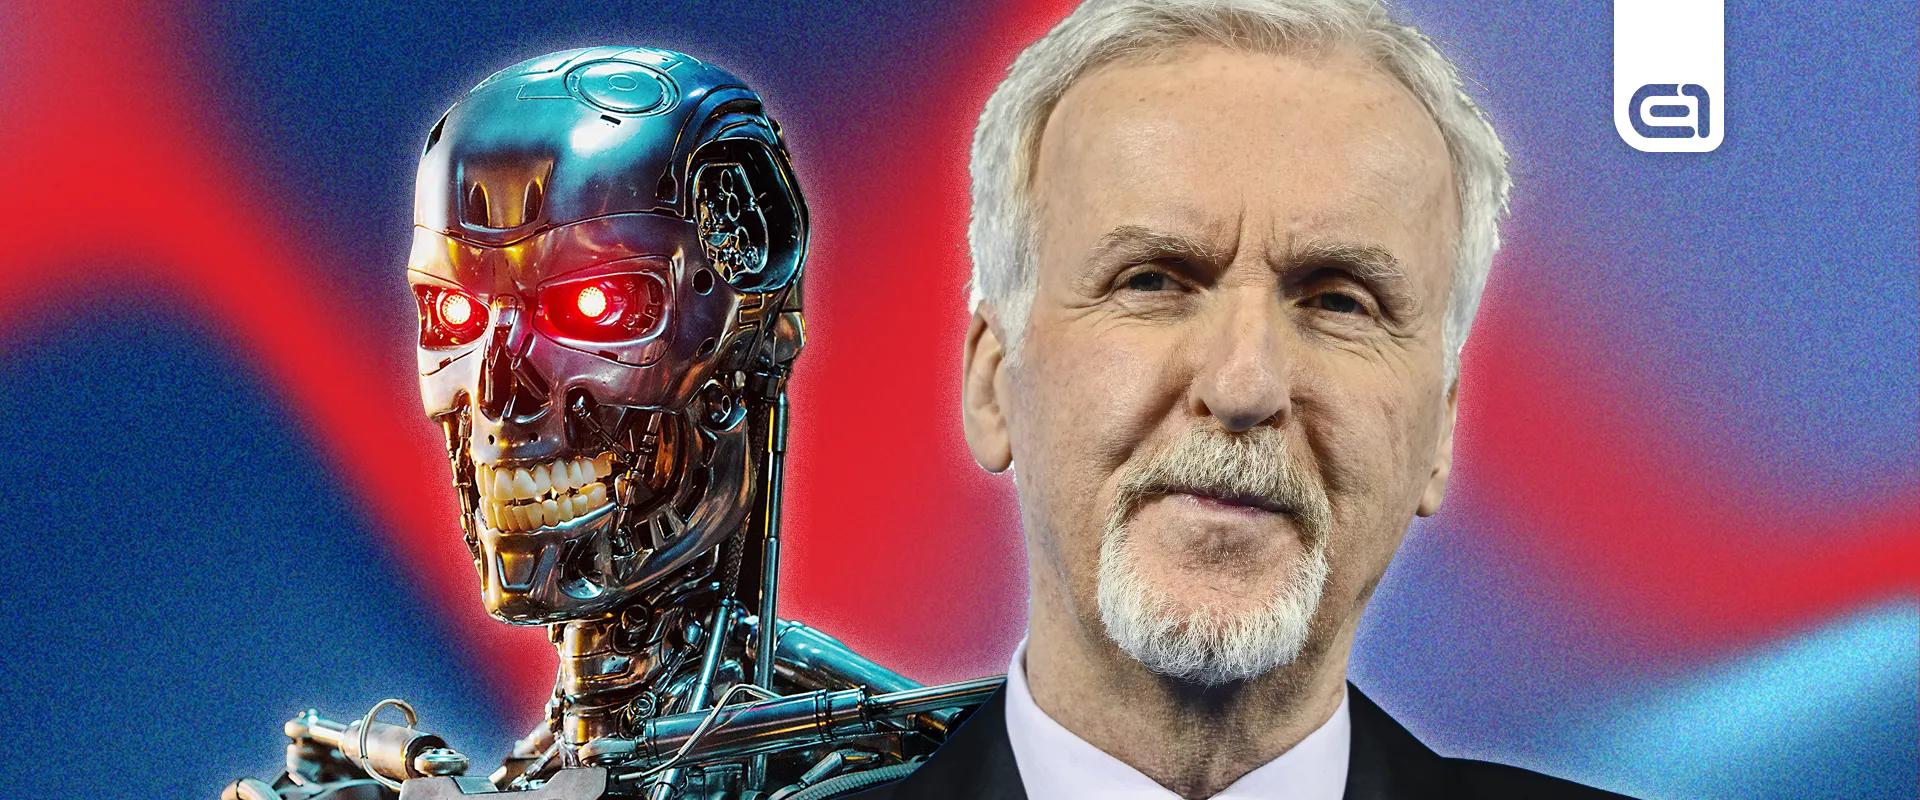 James Cameron új Terminator filmen dolgozik, de egy dolog miatt kivár vele